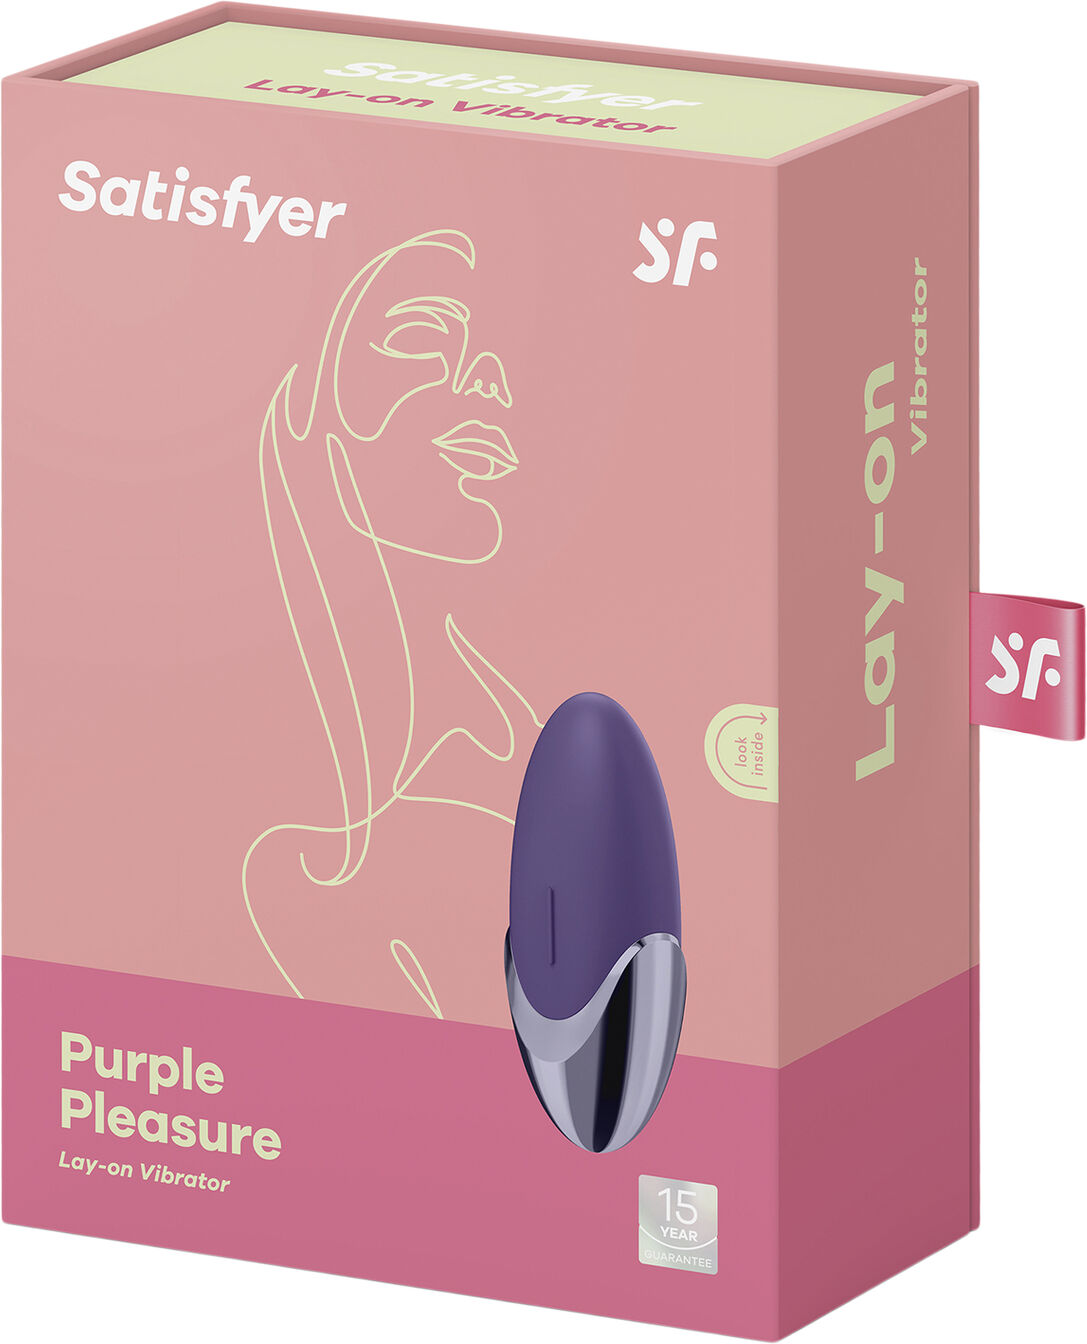 Satisfyer Purple Pleasure Lay On Vibrator Fra Satisfyer 269 00 Dkk